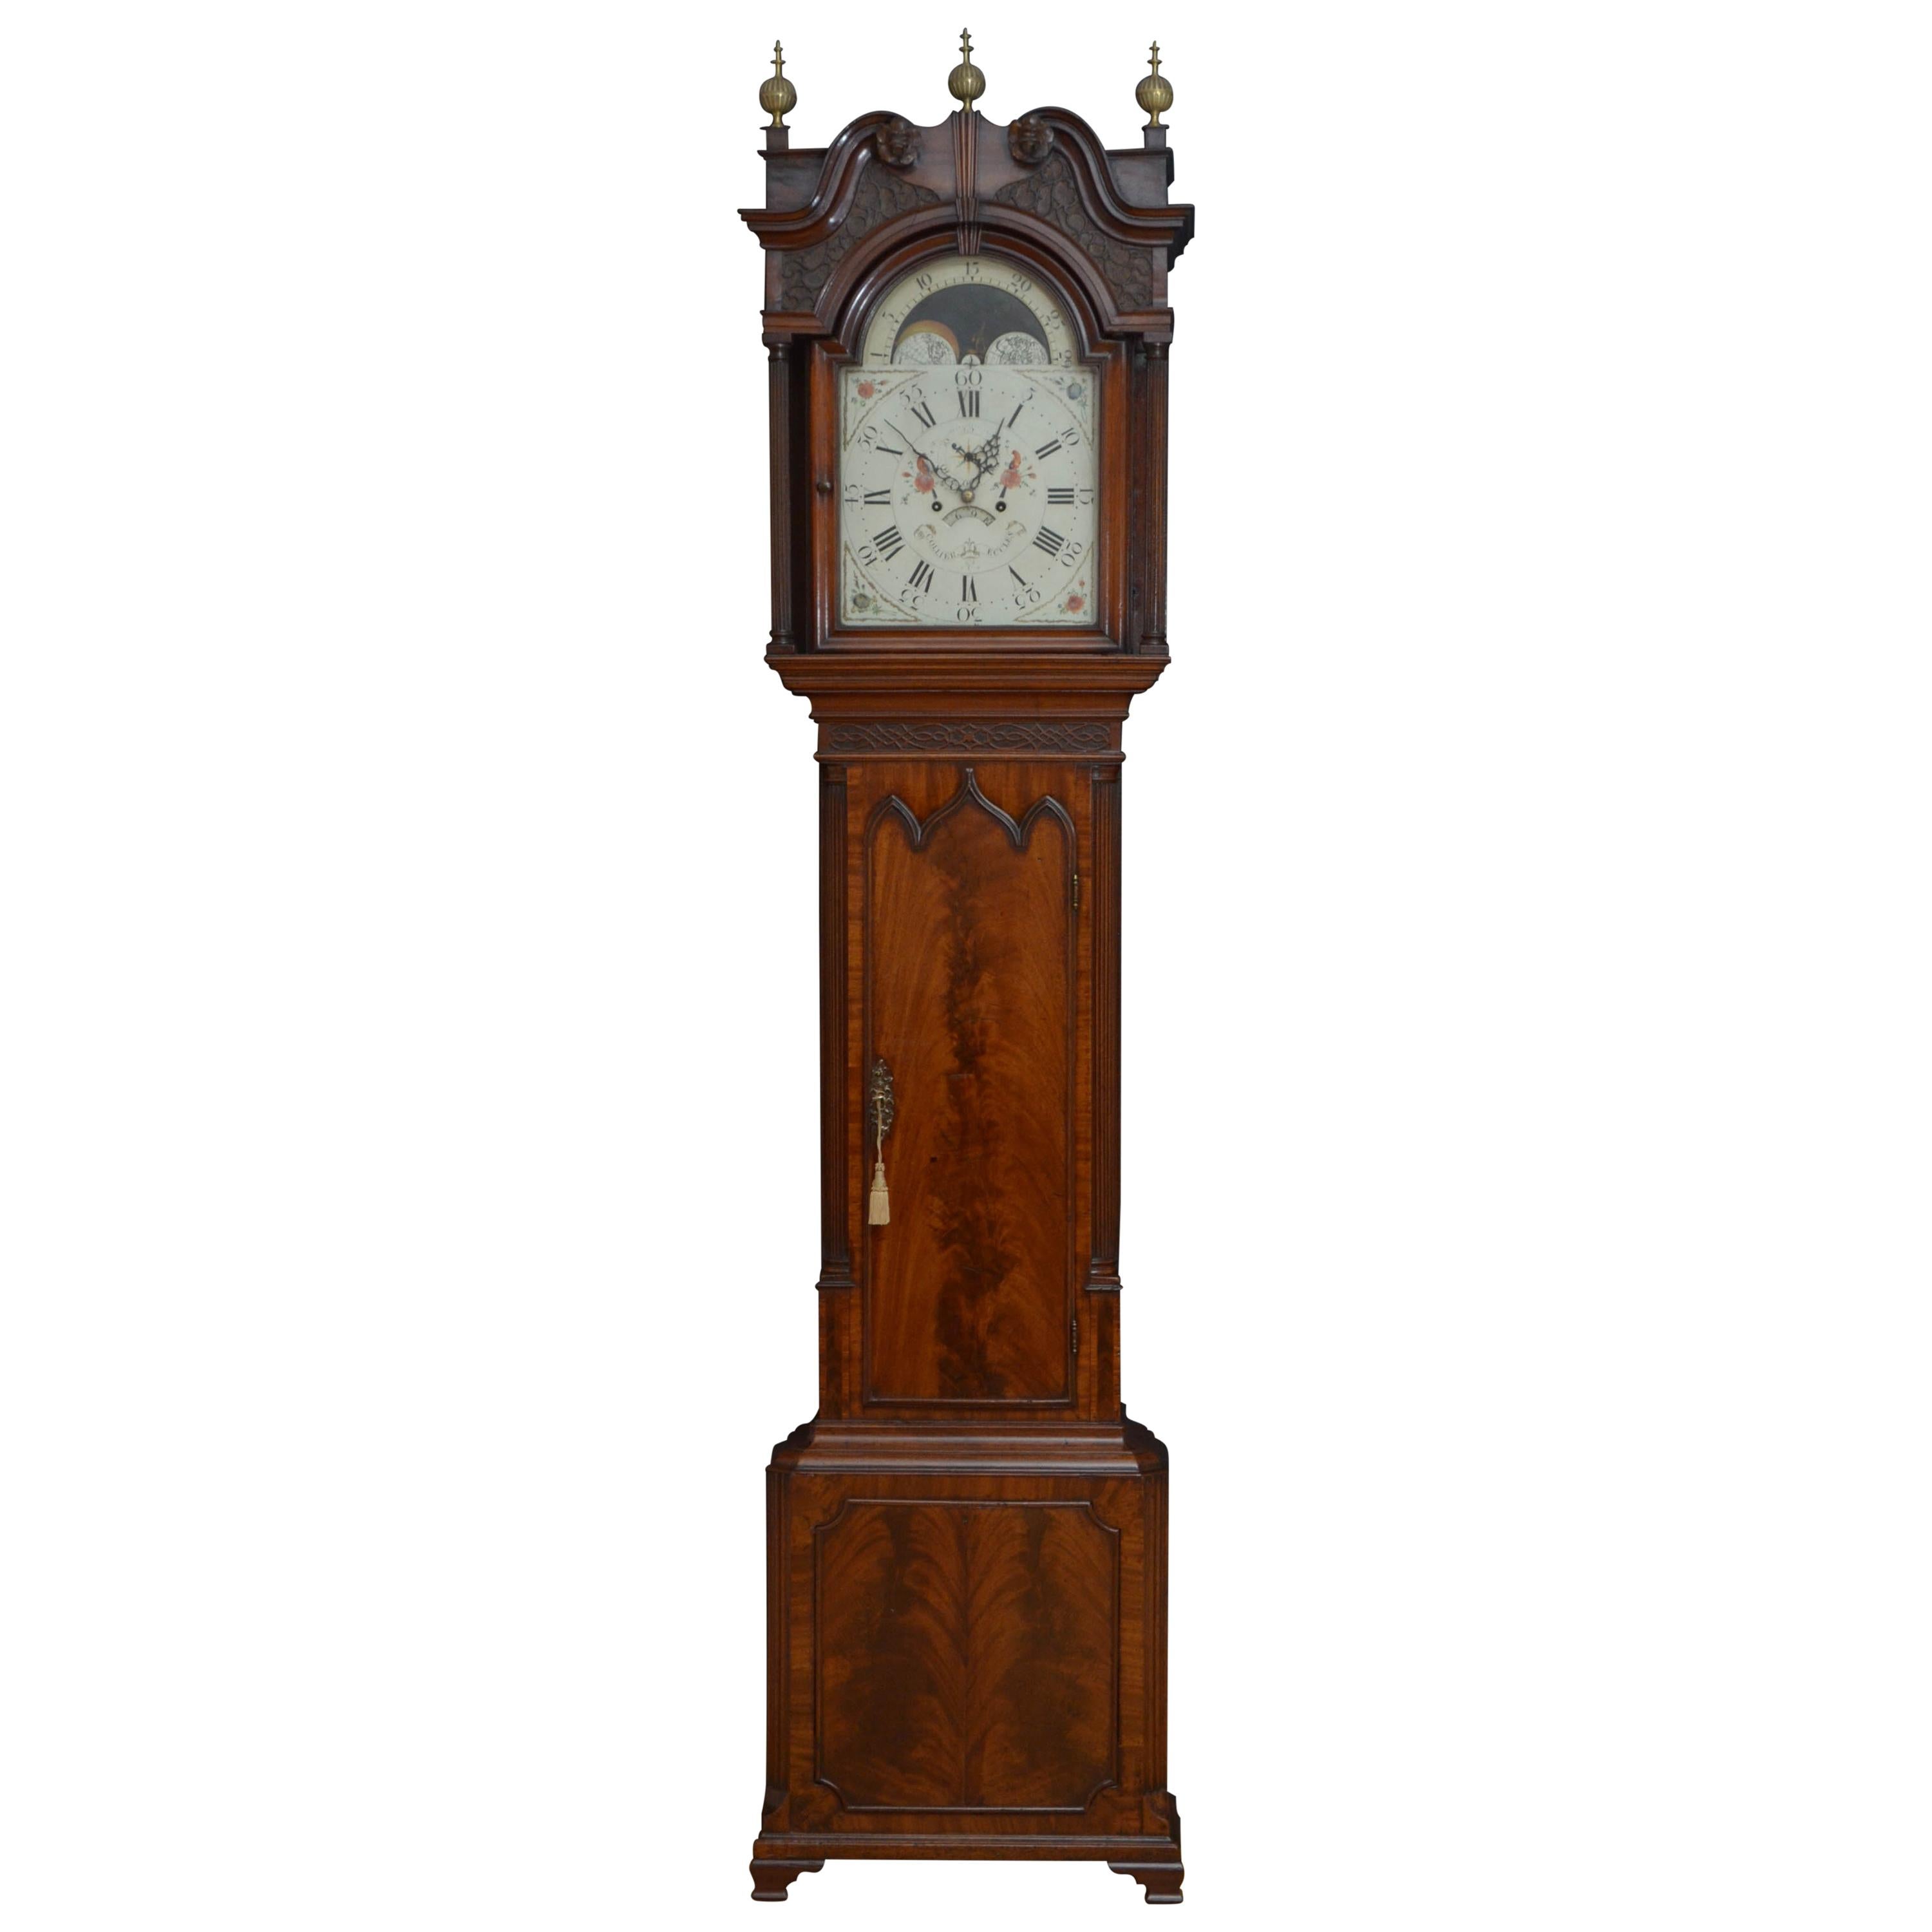 Fine Georgian Longcase Clock by Collier, Eccles